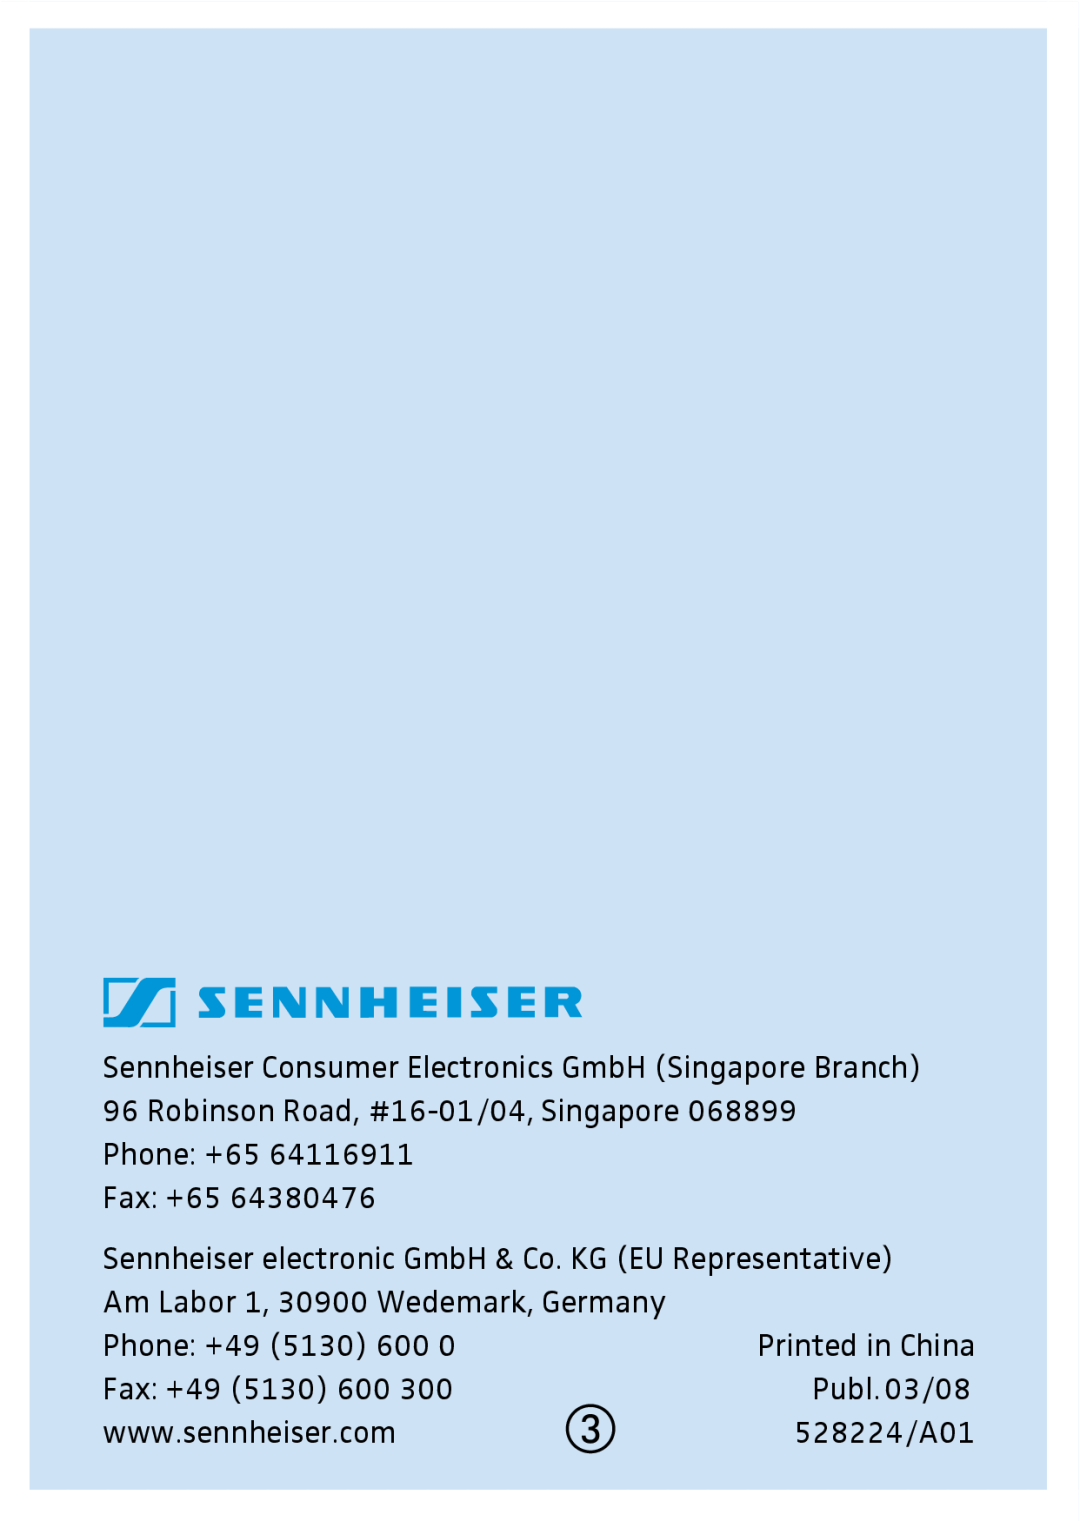 Sennheiser MX W1 instruction manual Sennheiser Consumer Electronics GmbH Singapore Branch, Phone +49 5130 